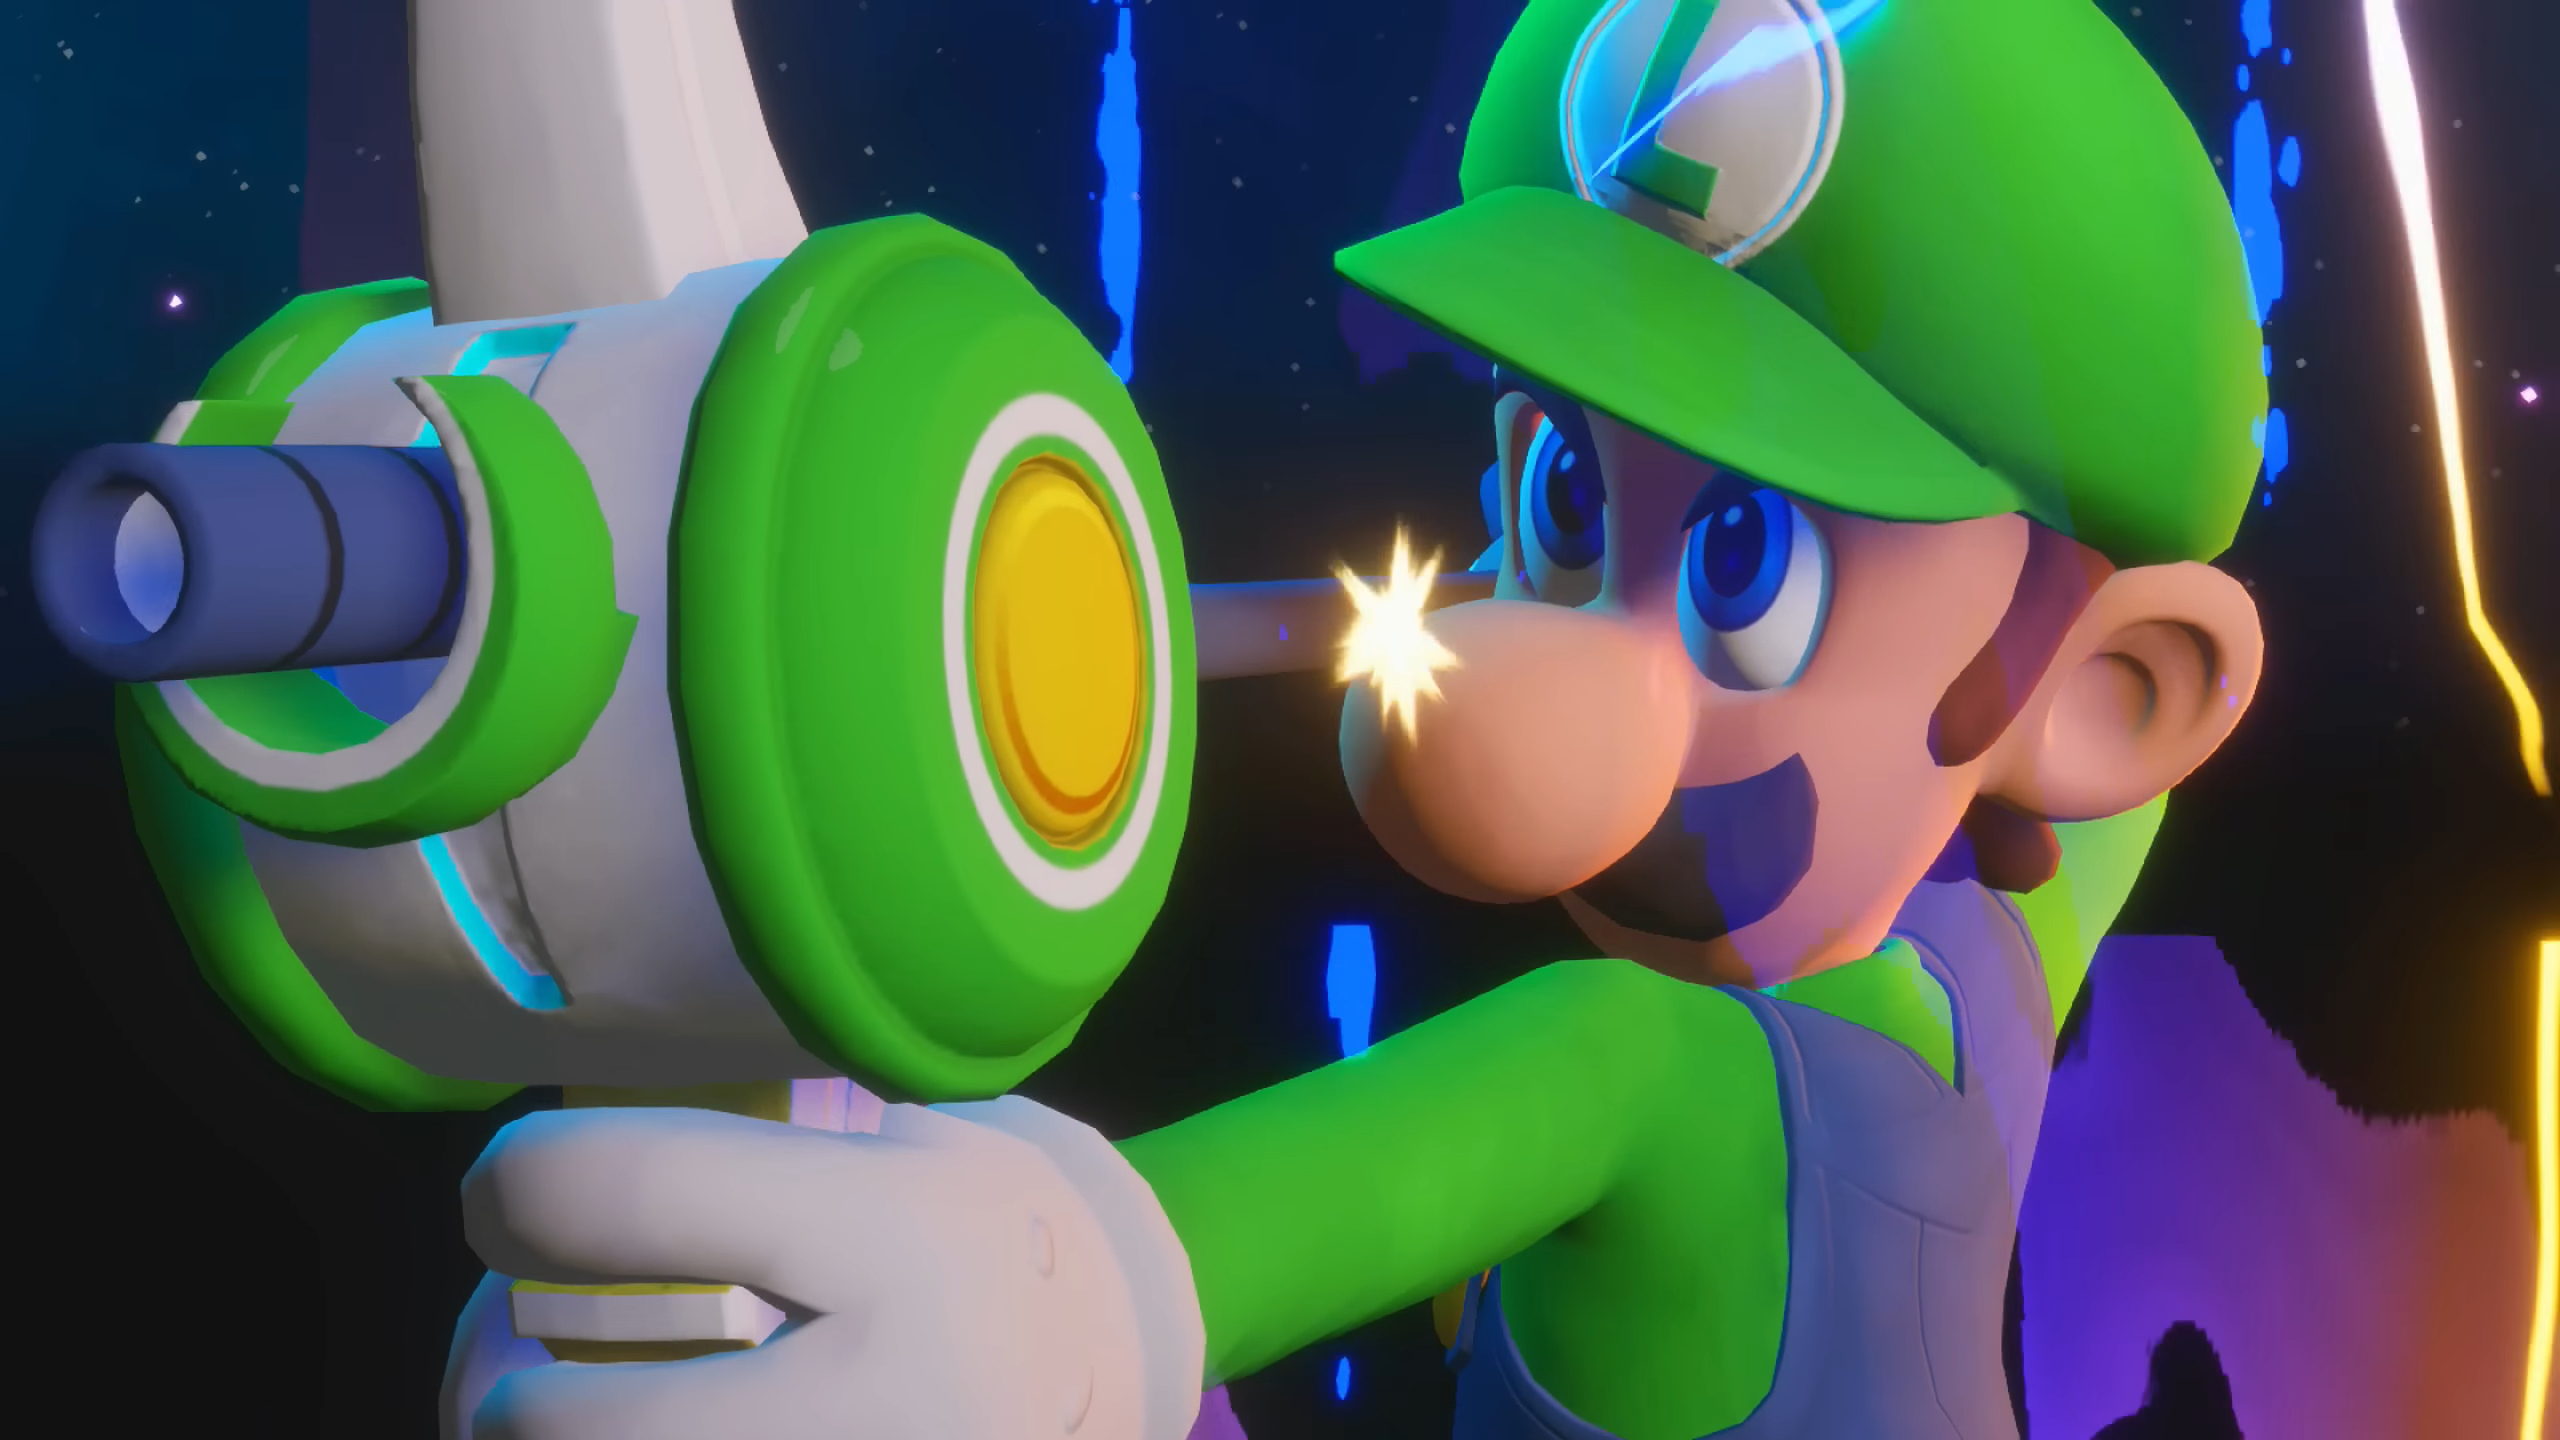 Luigi aims his bow.